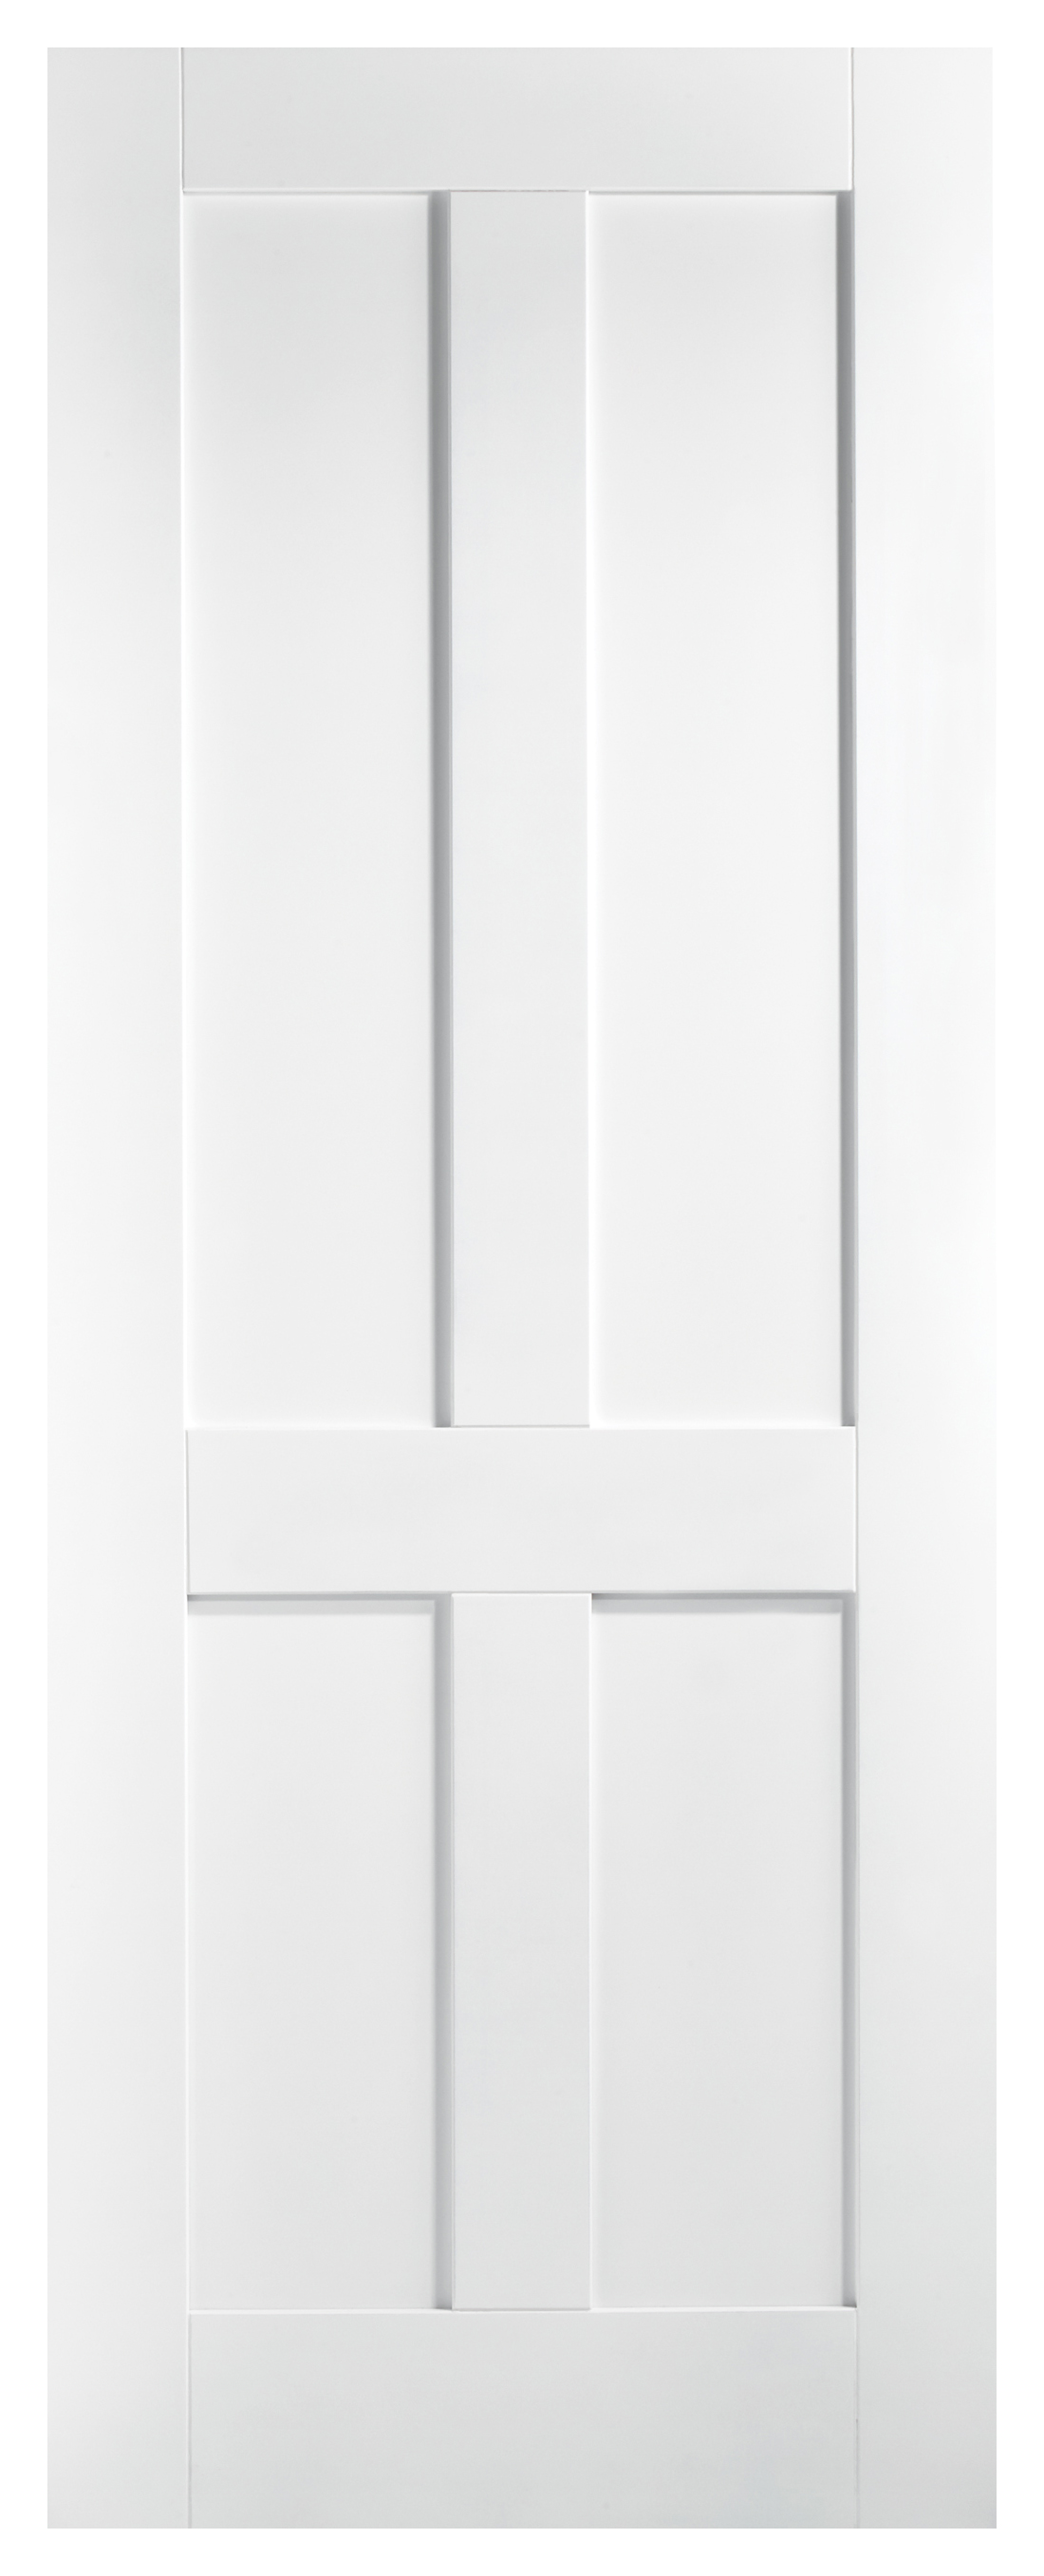 LPD Internal London 4 Panel Primed White FD30 Fire Door - 826 x 2040mm